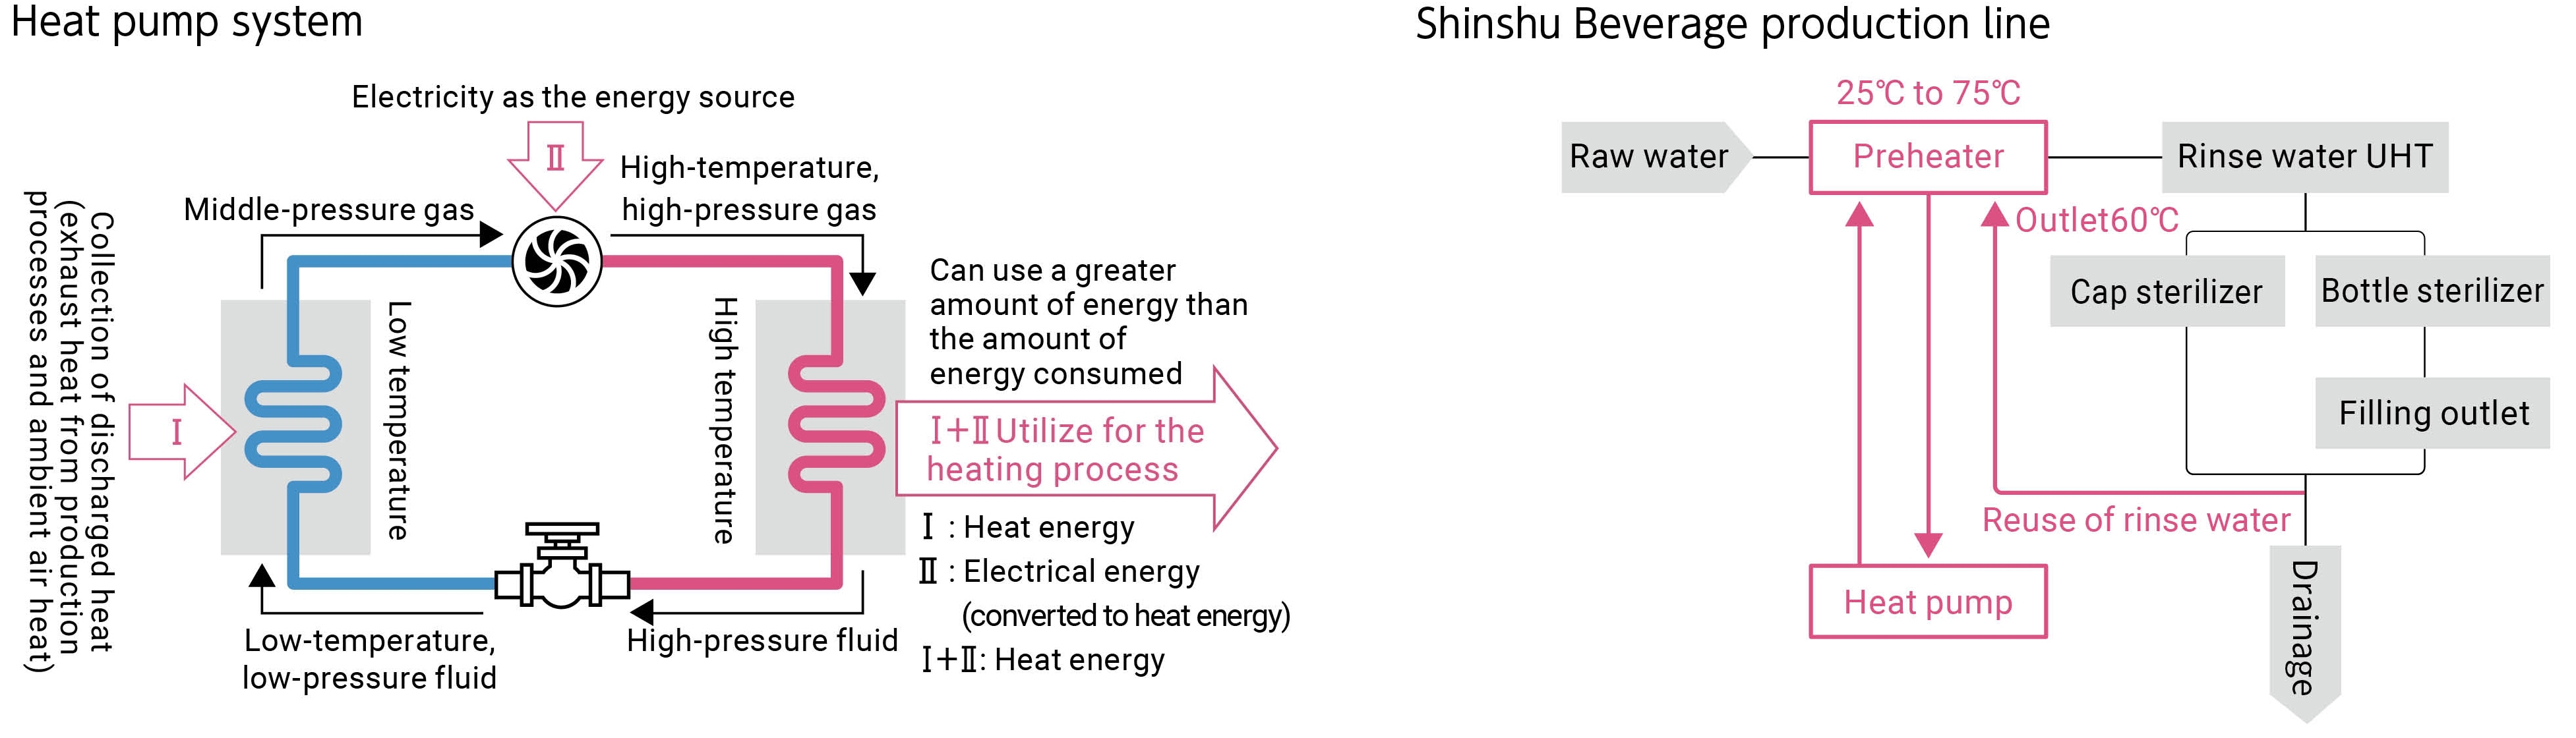 Heat pump system　Shinshu Beverage production line